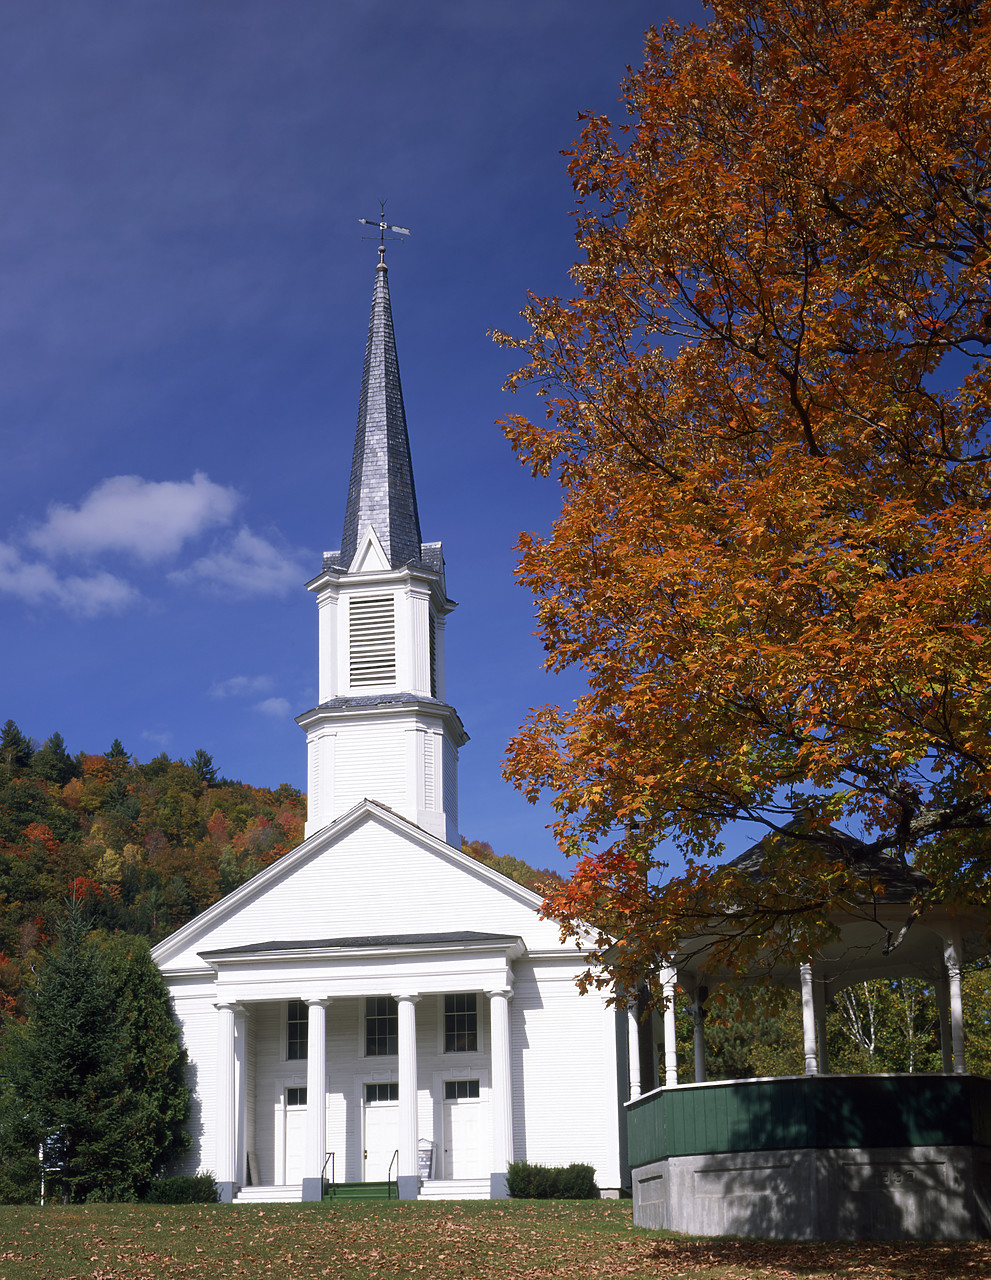 #955780-1 - Church & Bandstand in Autumn, Sharon, Vermont, USA